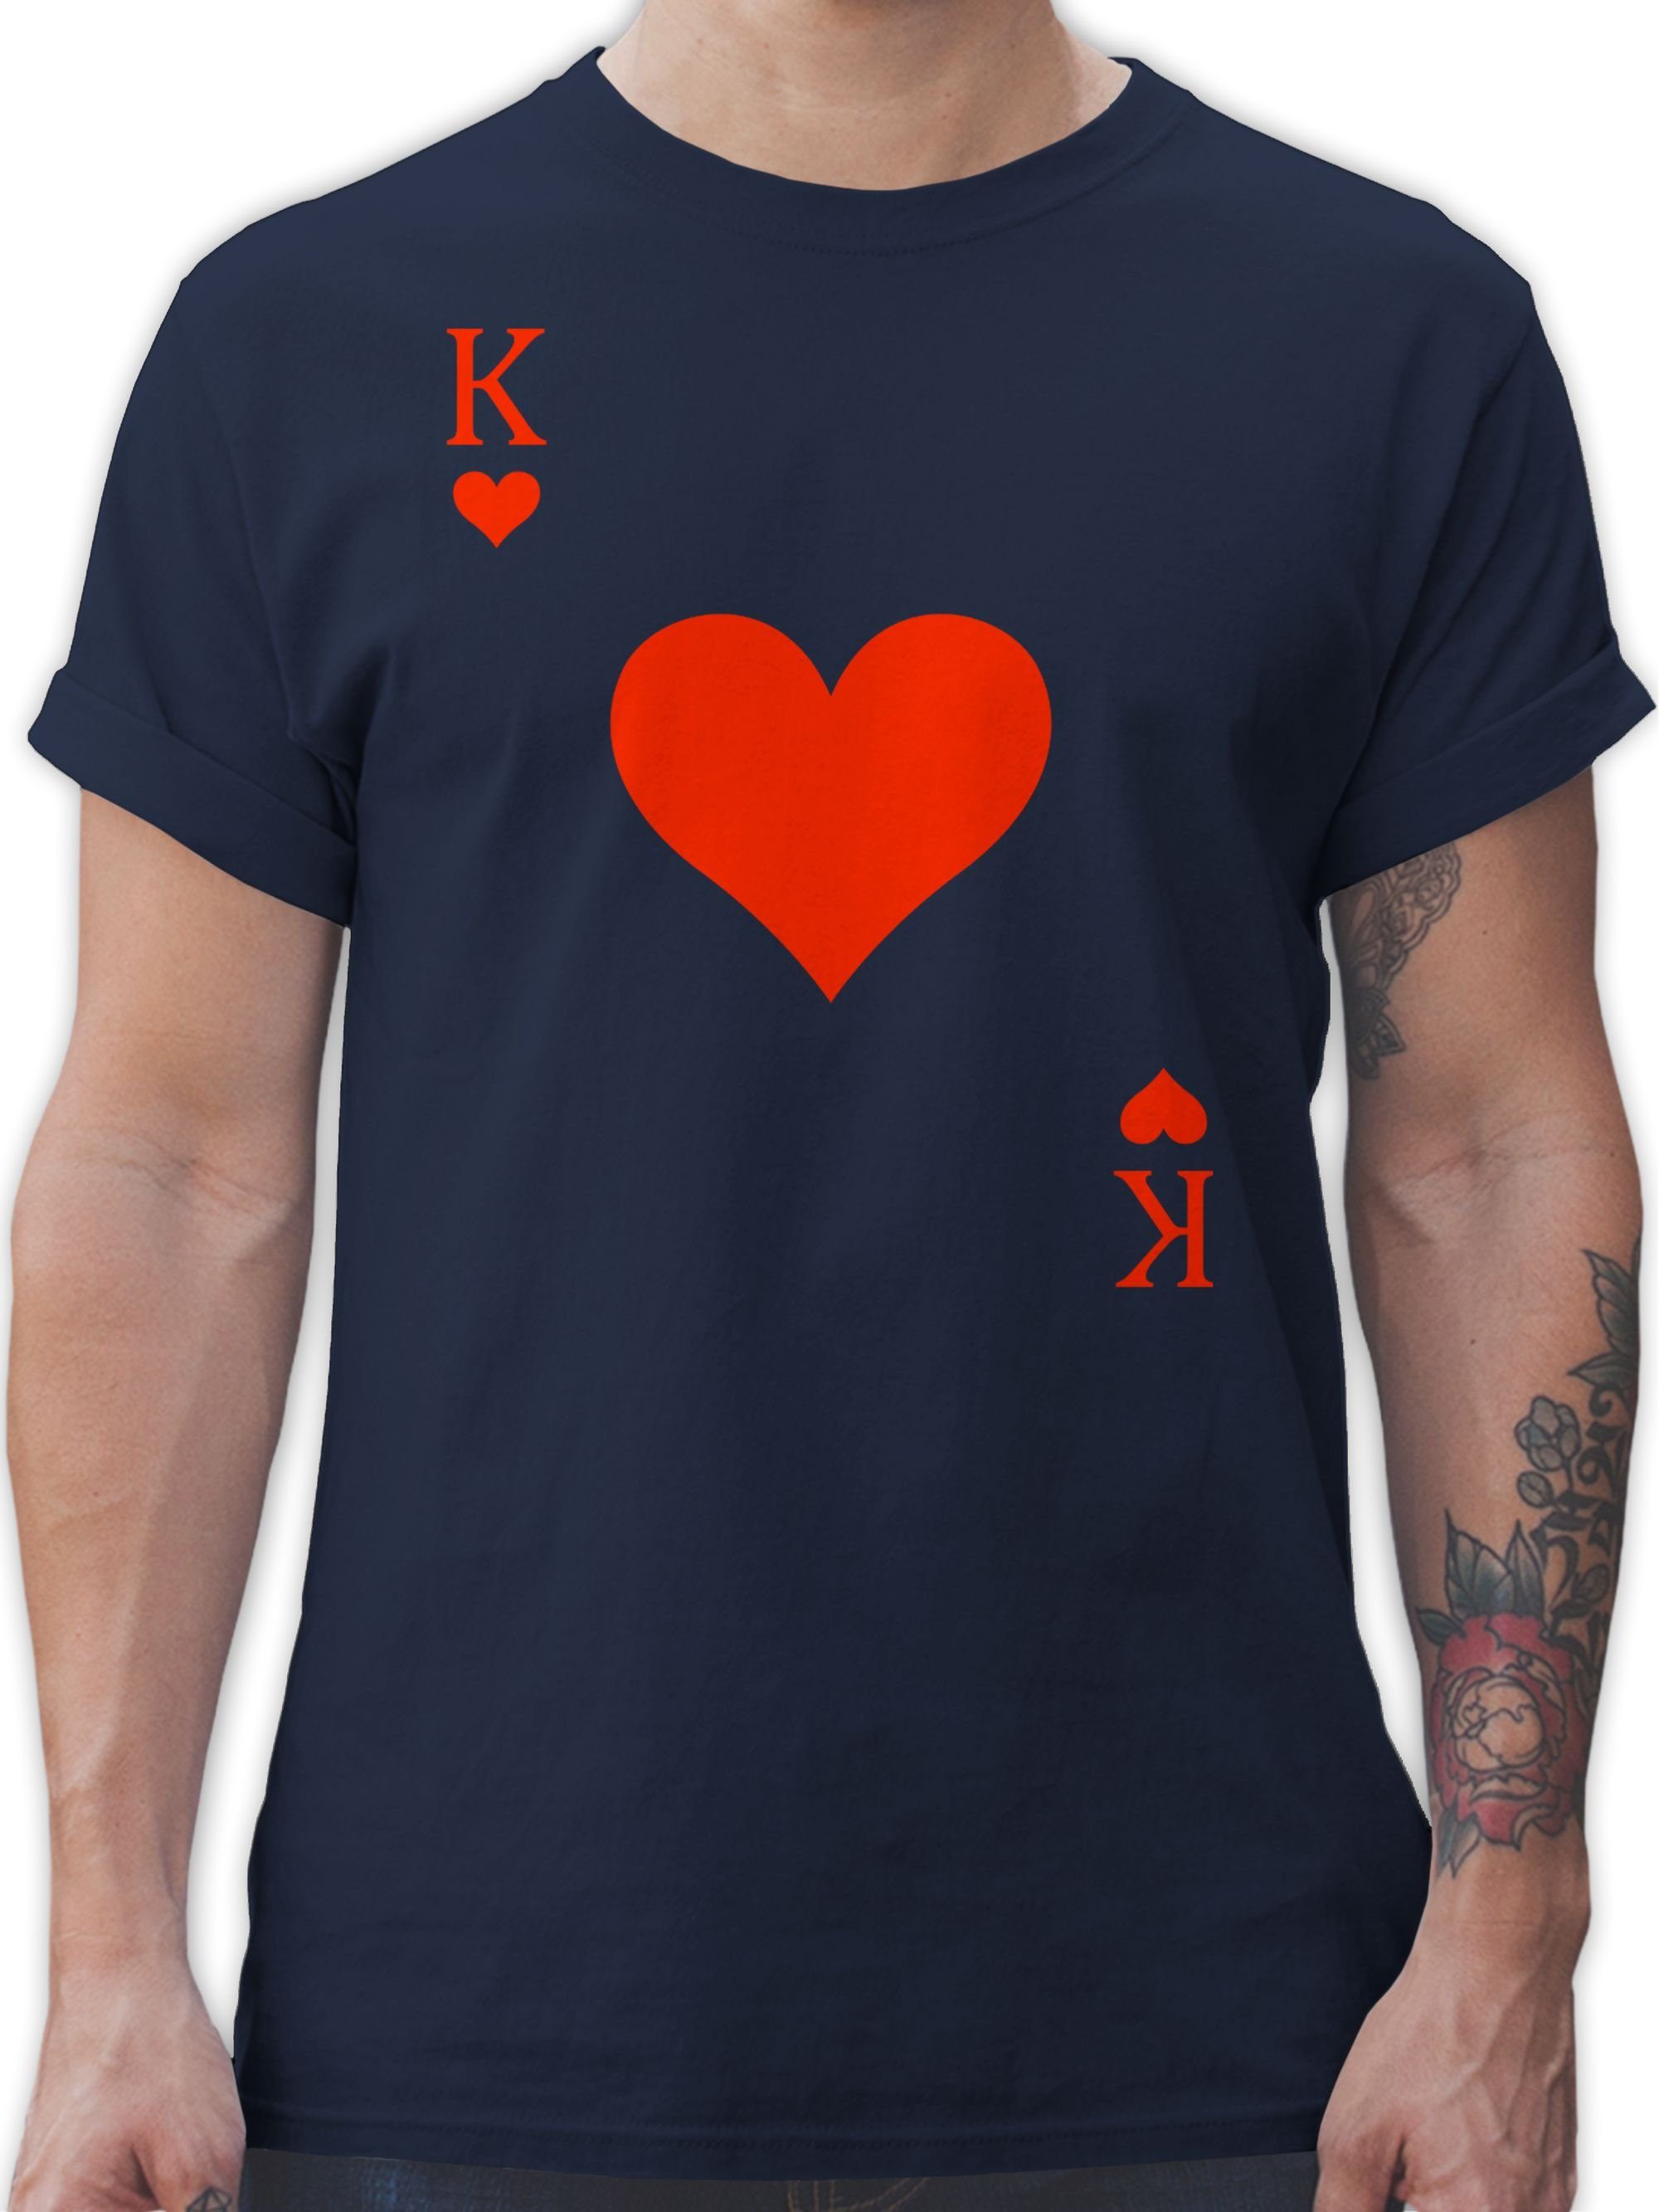 Shirtracer T-Shirt Herz König - King Queen Kartenspiel Karneval - Herzkönig Spielkarte He Karneval & Fasching 3 Navy Blau | T-Shirts